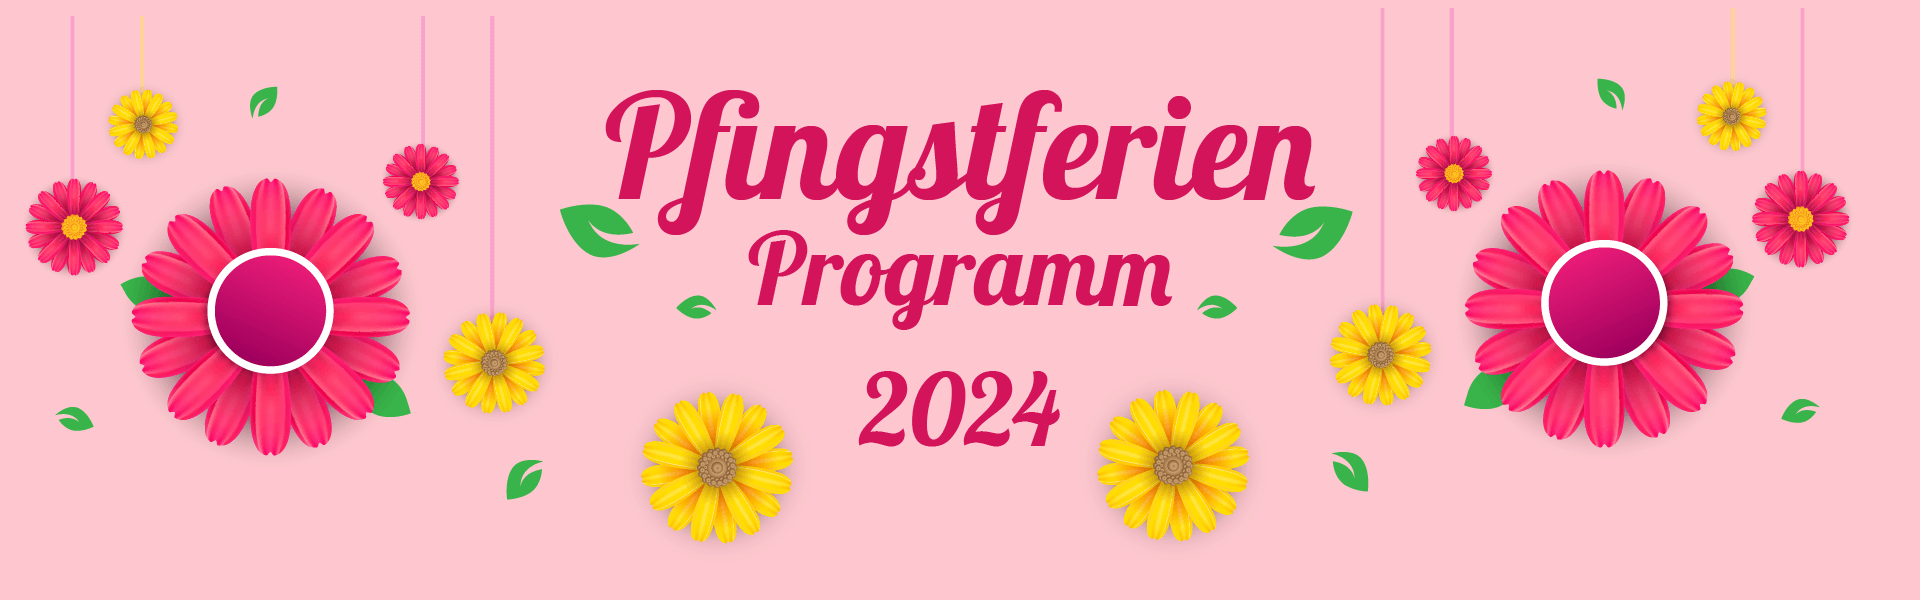 Pfingstferienprogramm Banner 2024